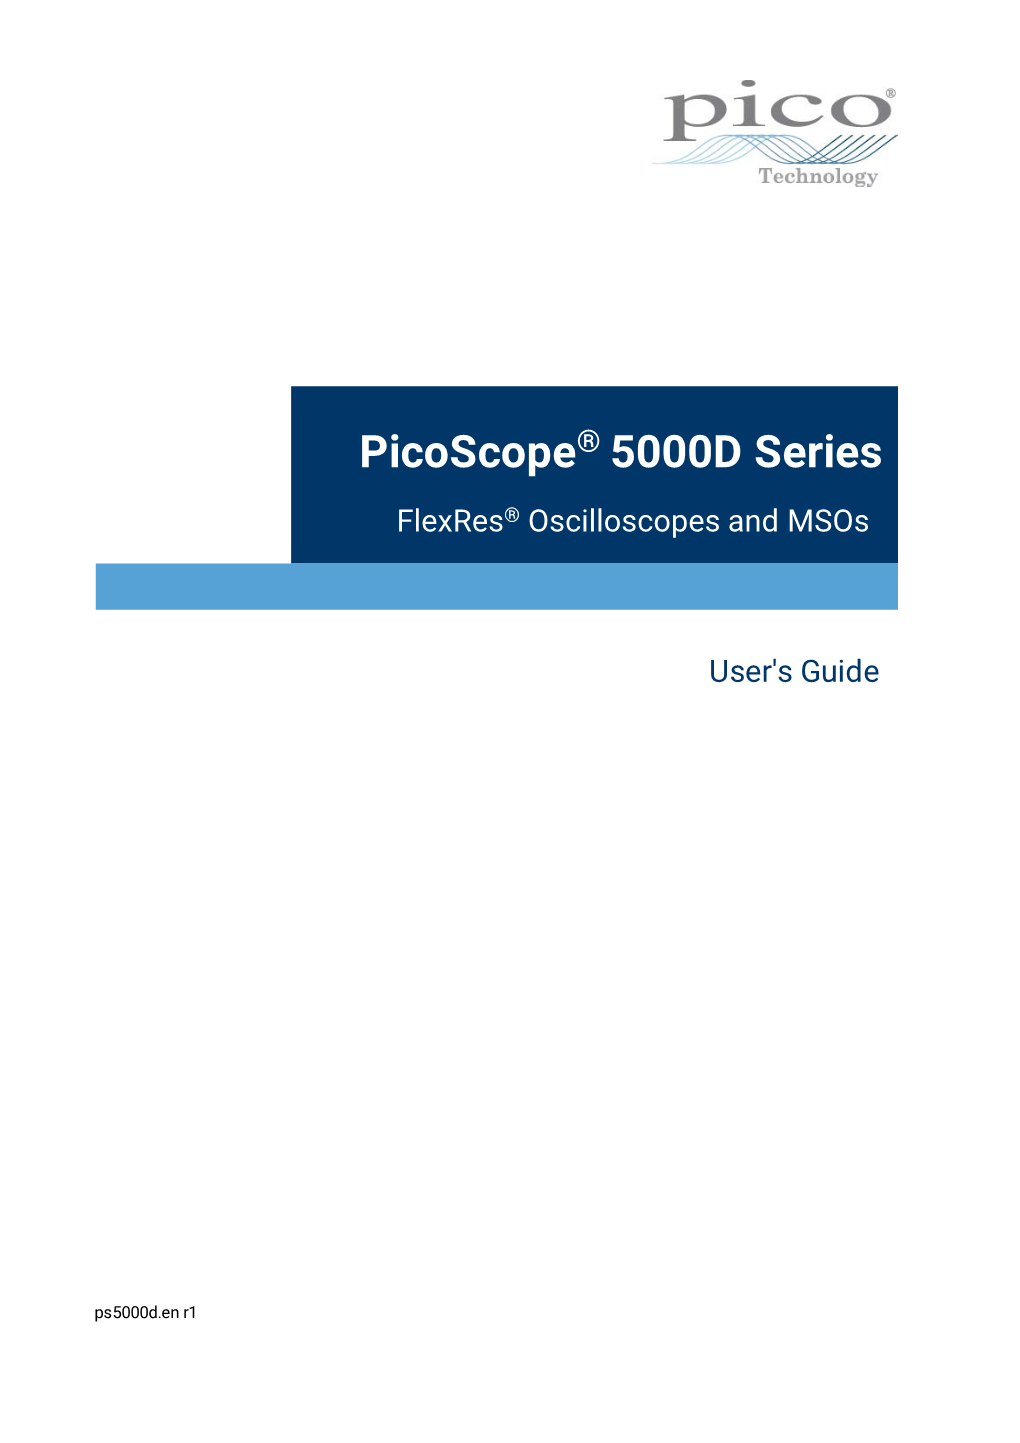 Picoscope 5000D Series User's Guide